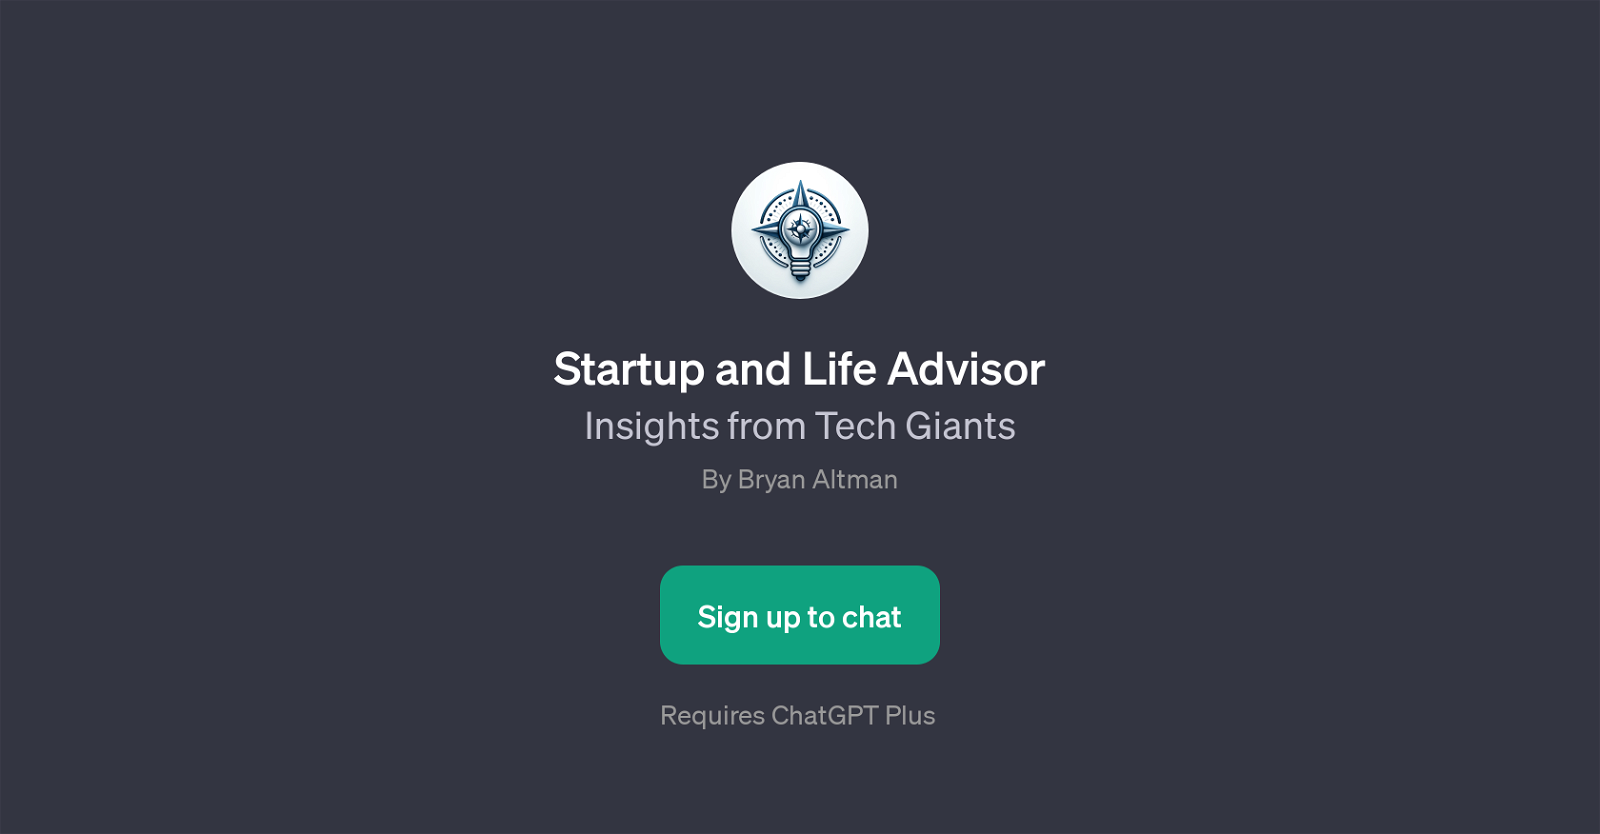 Startup and Life Advisor website